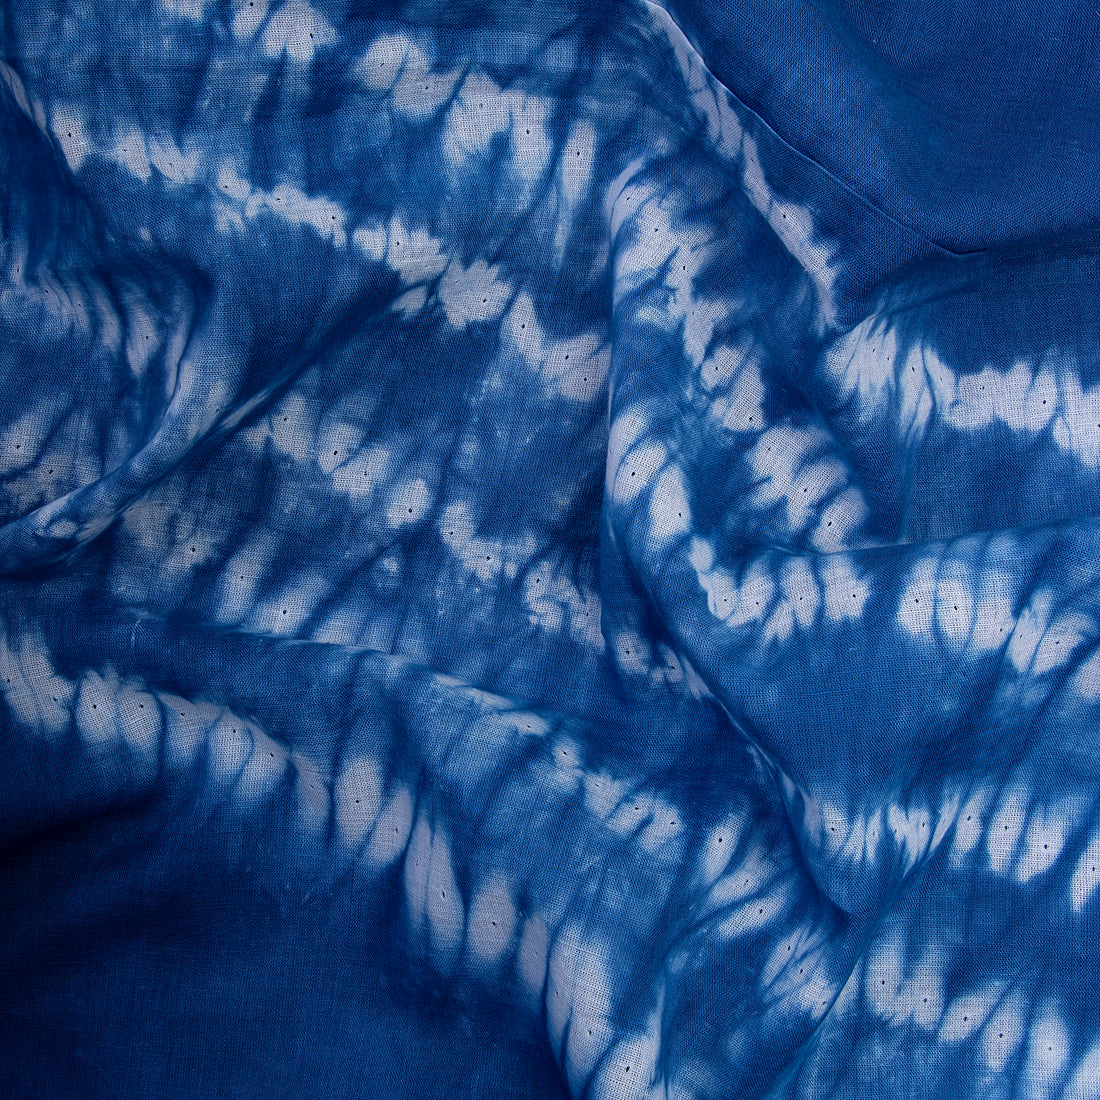 Handmade Shibori Tie Dye Cotton Fabric